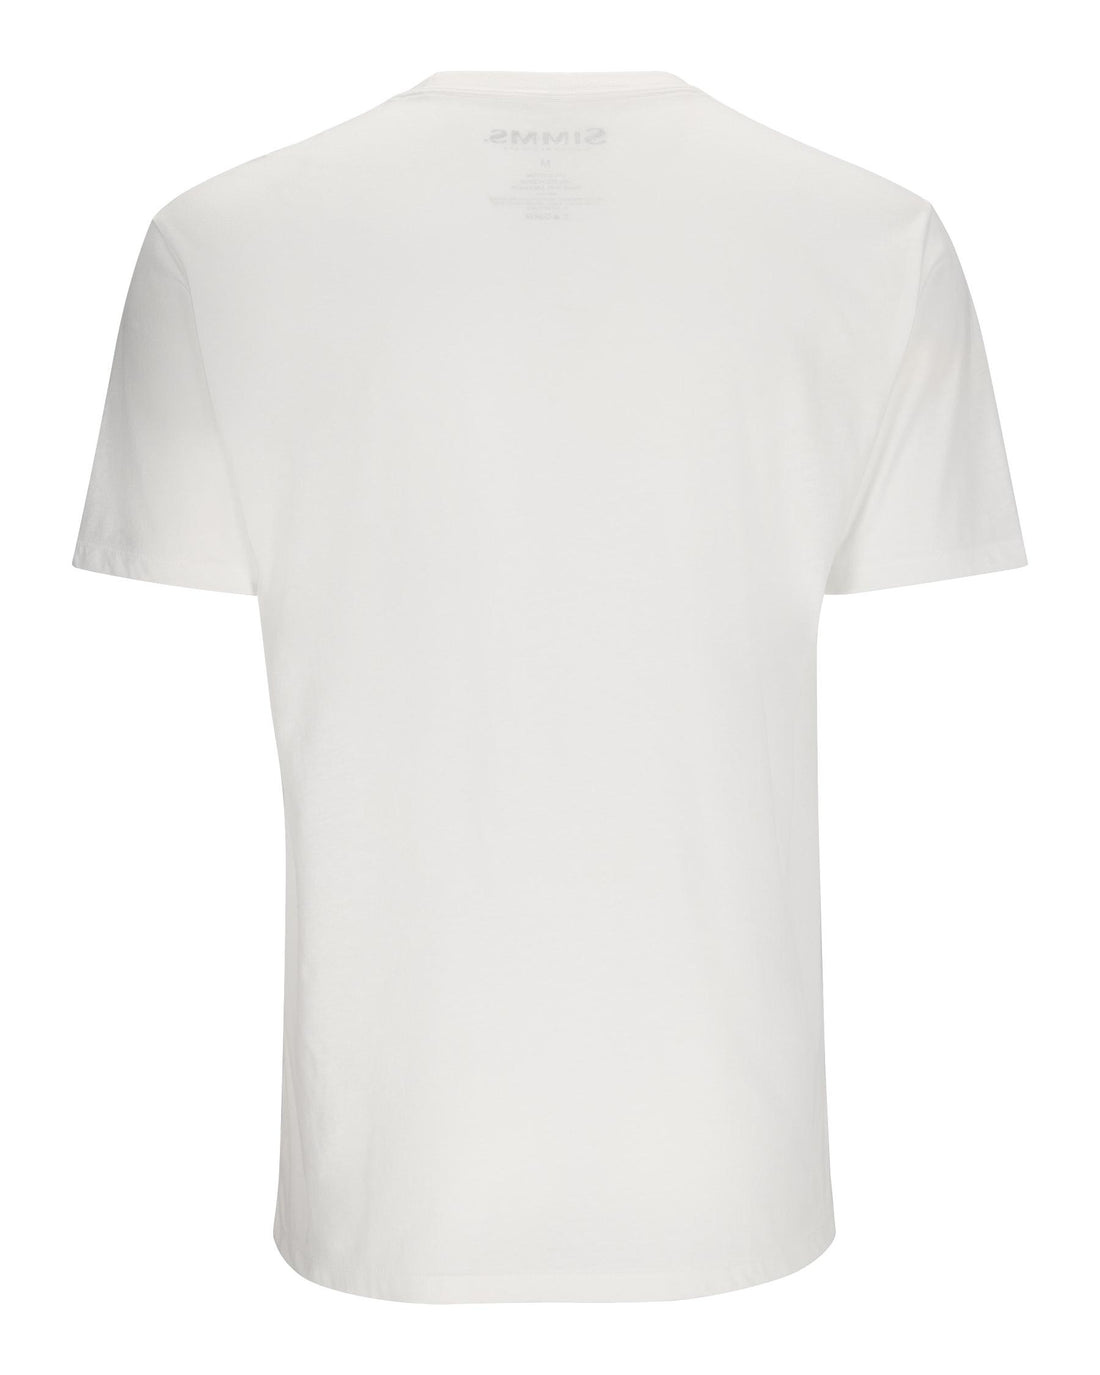 Simms Logo T-shirt White